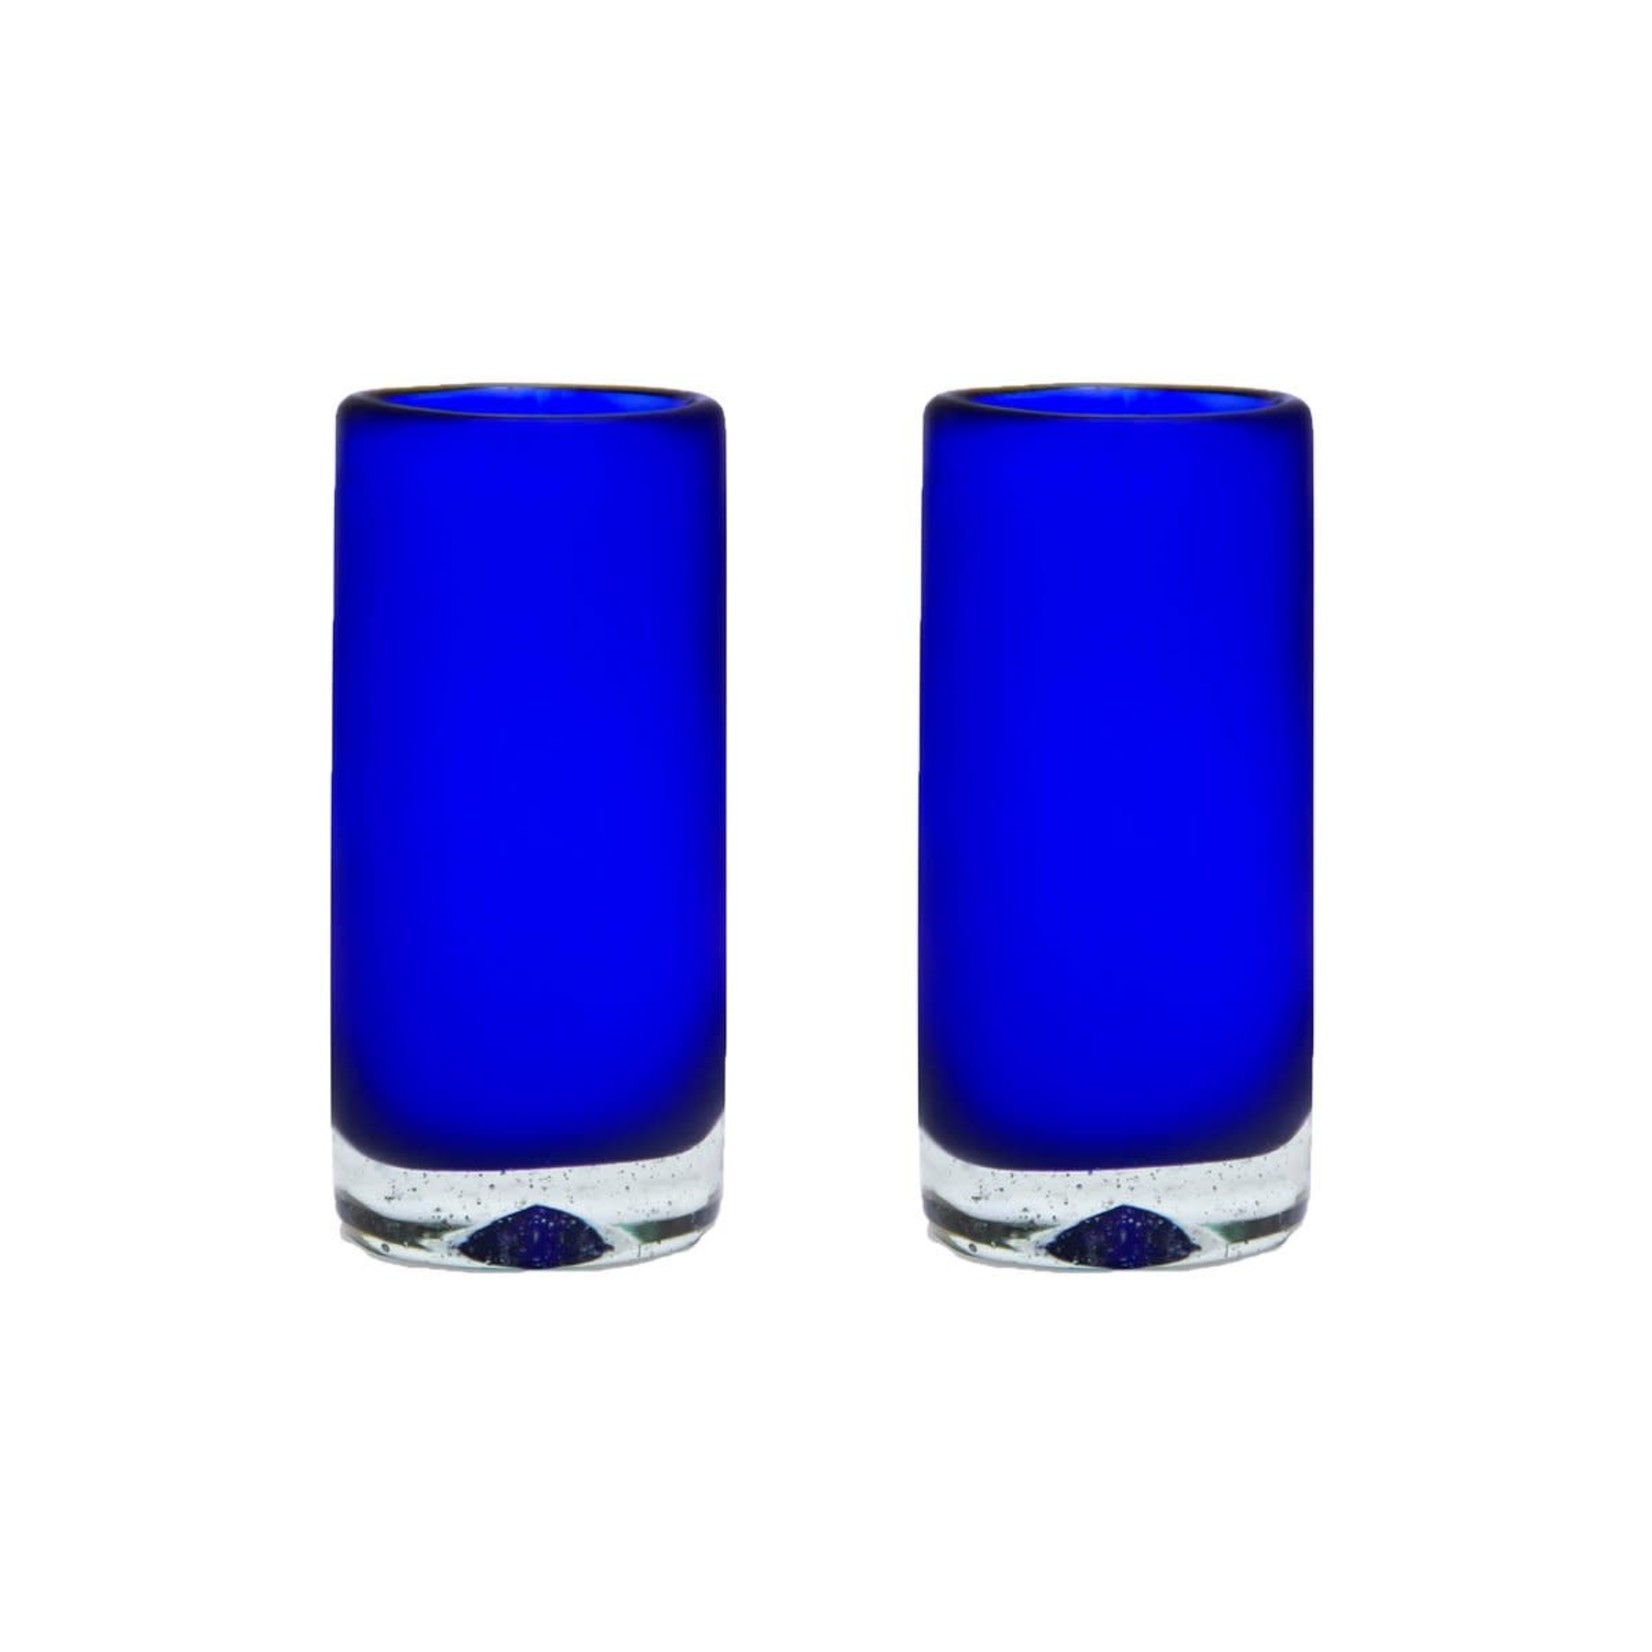 Mexican Shot Glasses Blue - Set of 2